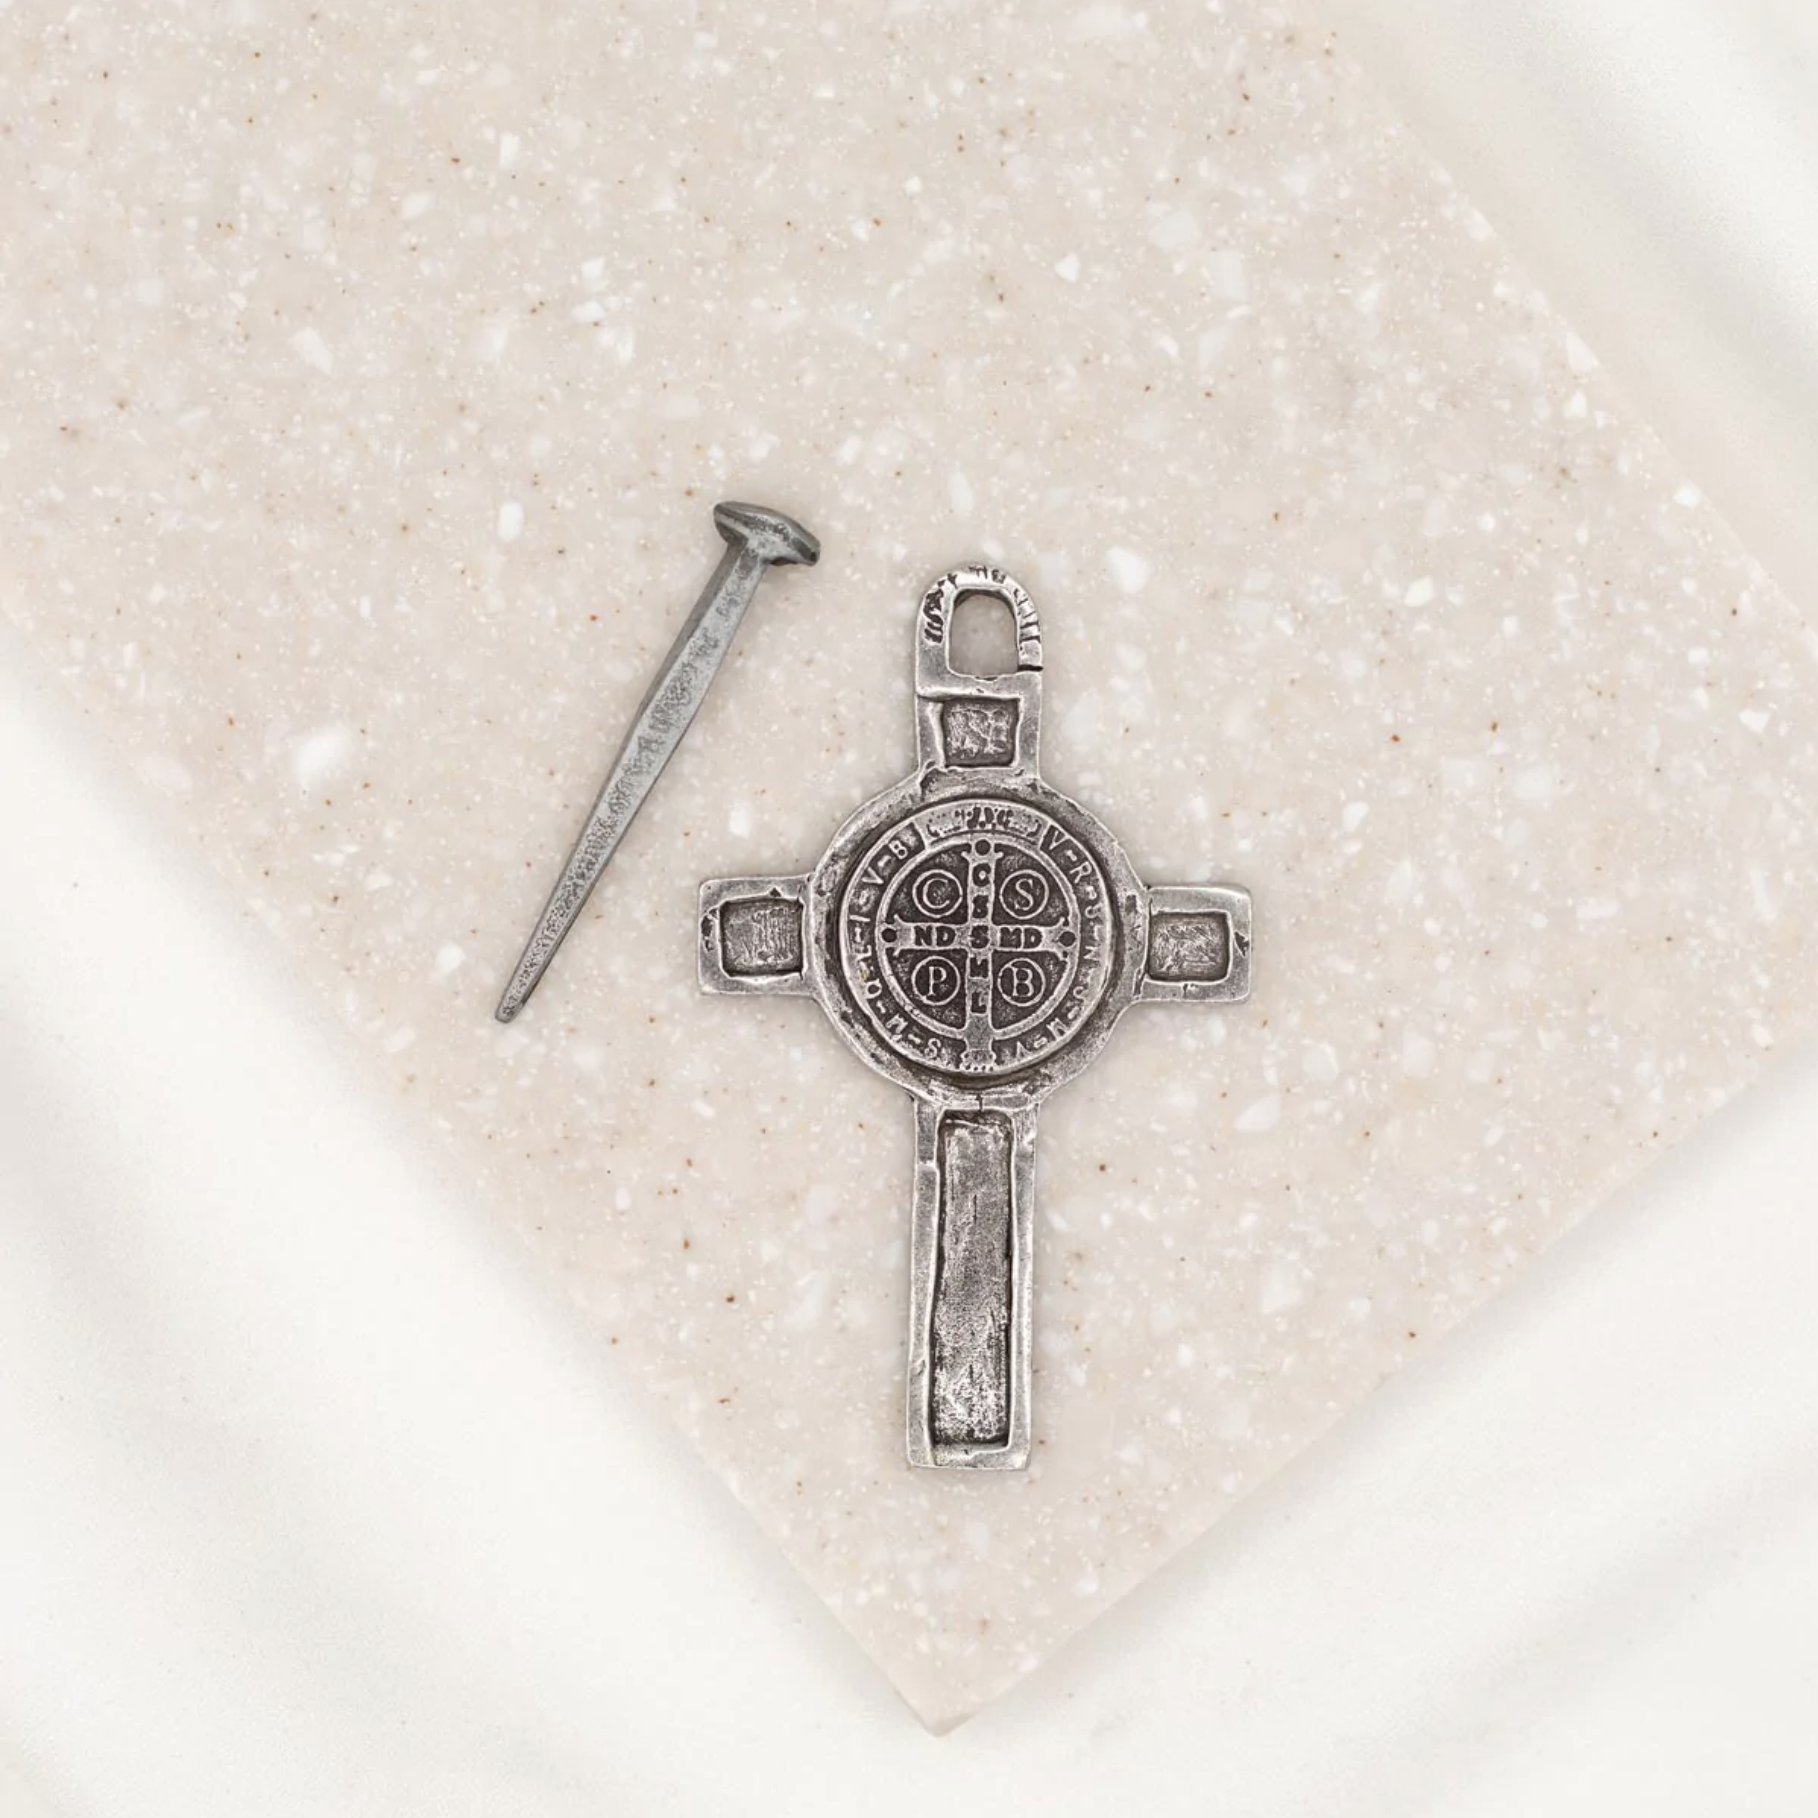 Benedictine Medal - Key Rings - My Saint My Hero